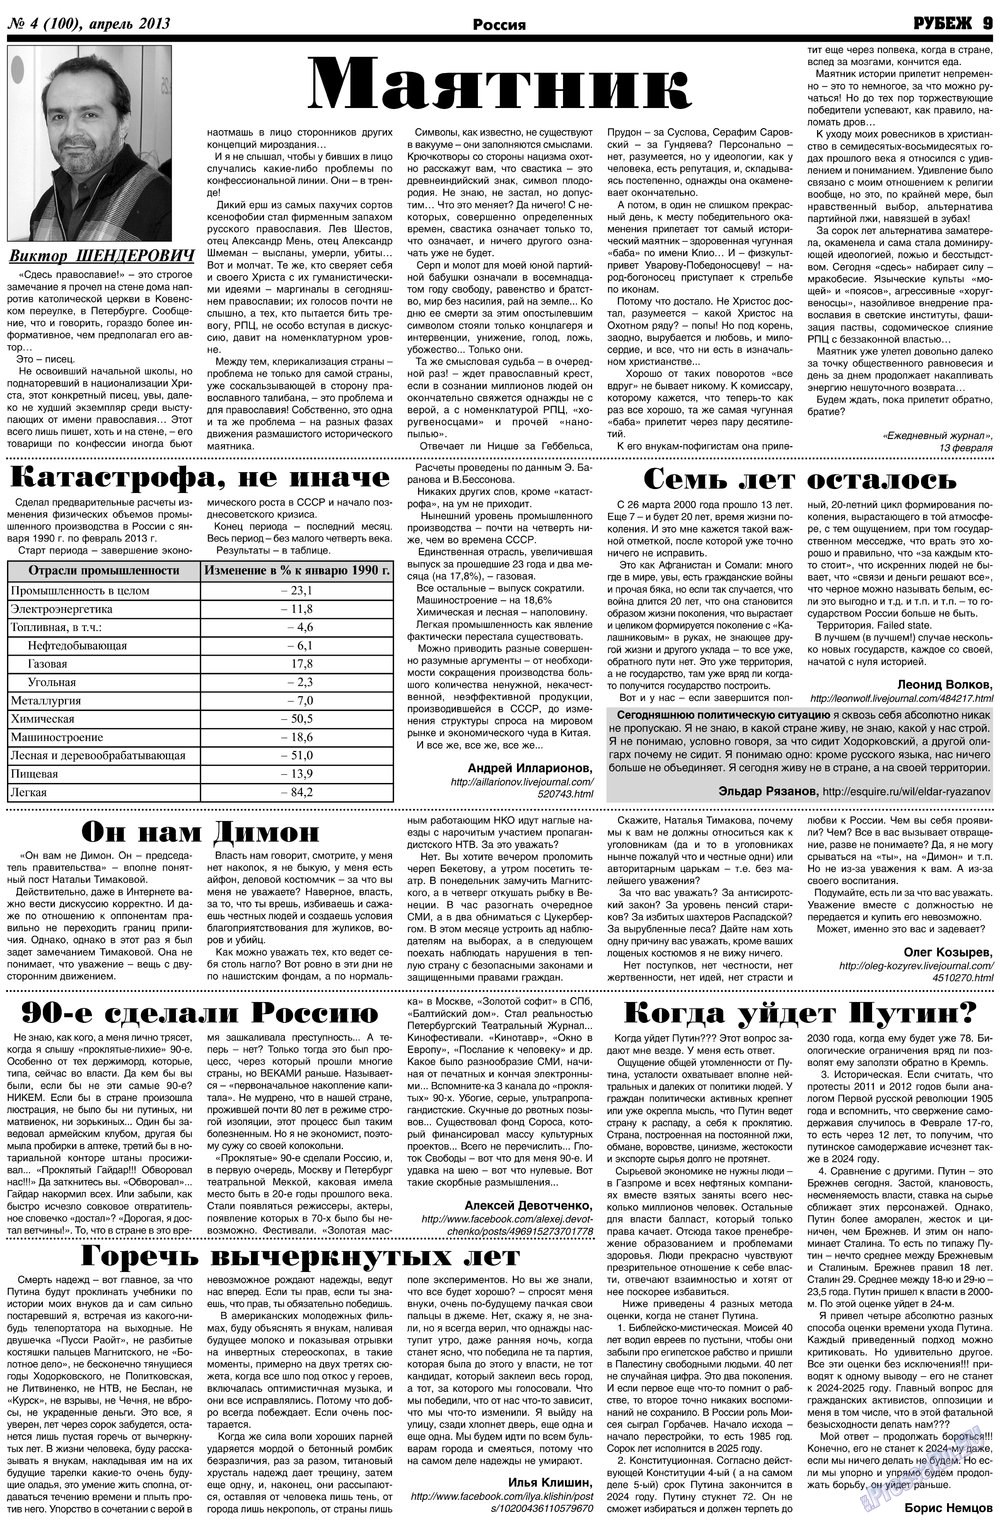 Рубеж, газета. 2013 №4 стр.9